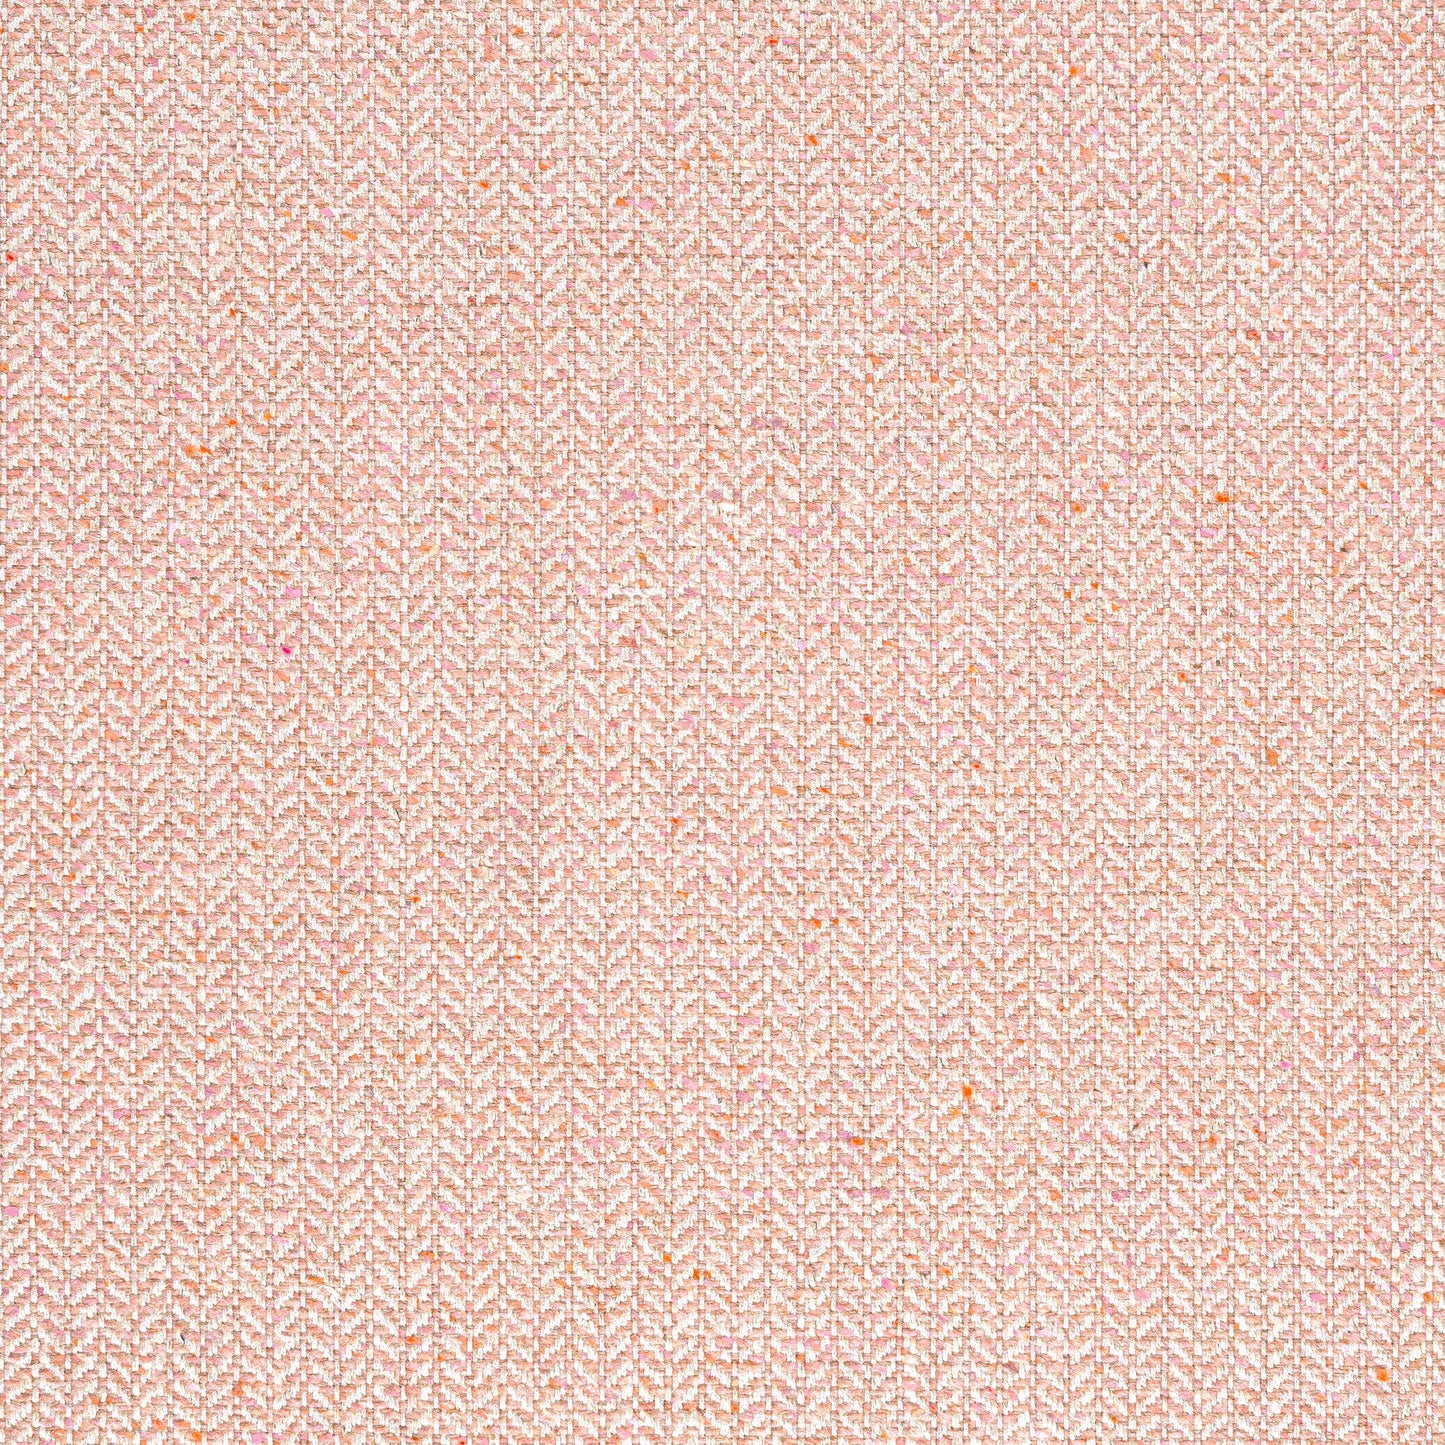 Purchase Thibaut Fabric Item# W80925 pattern name Heath color Petal